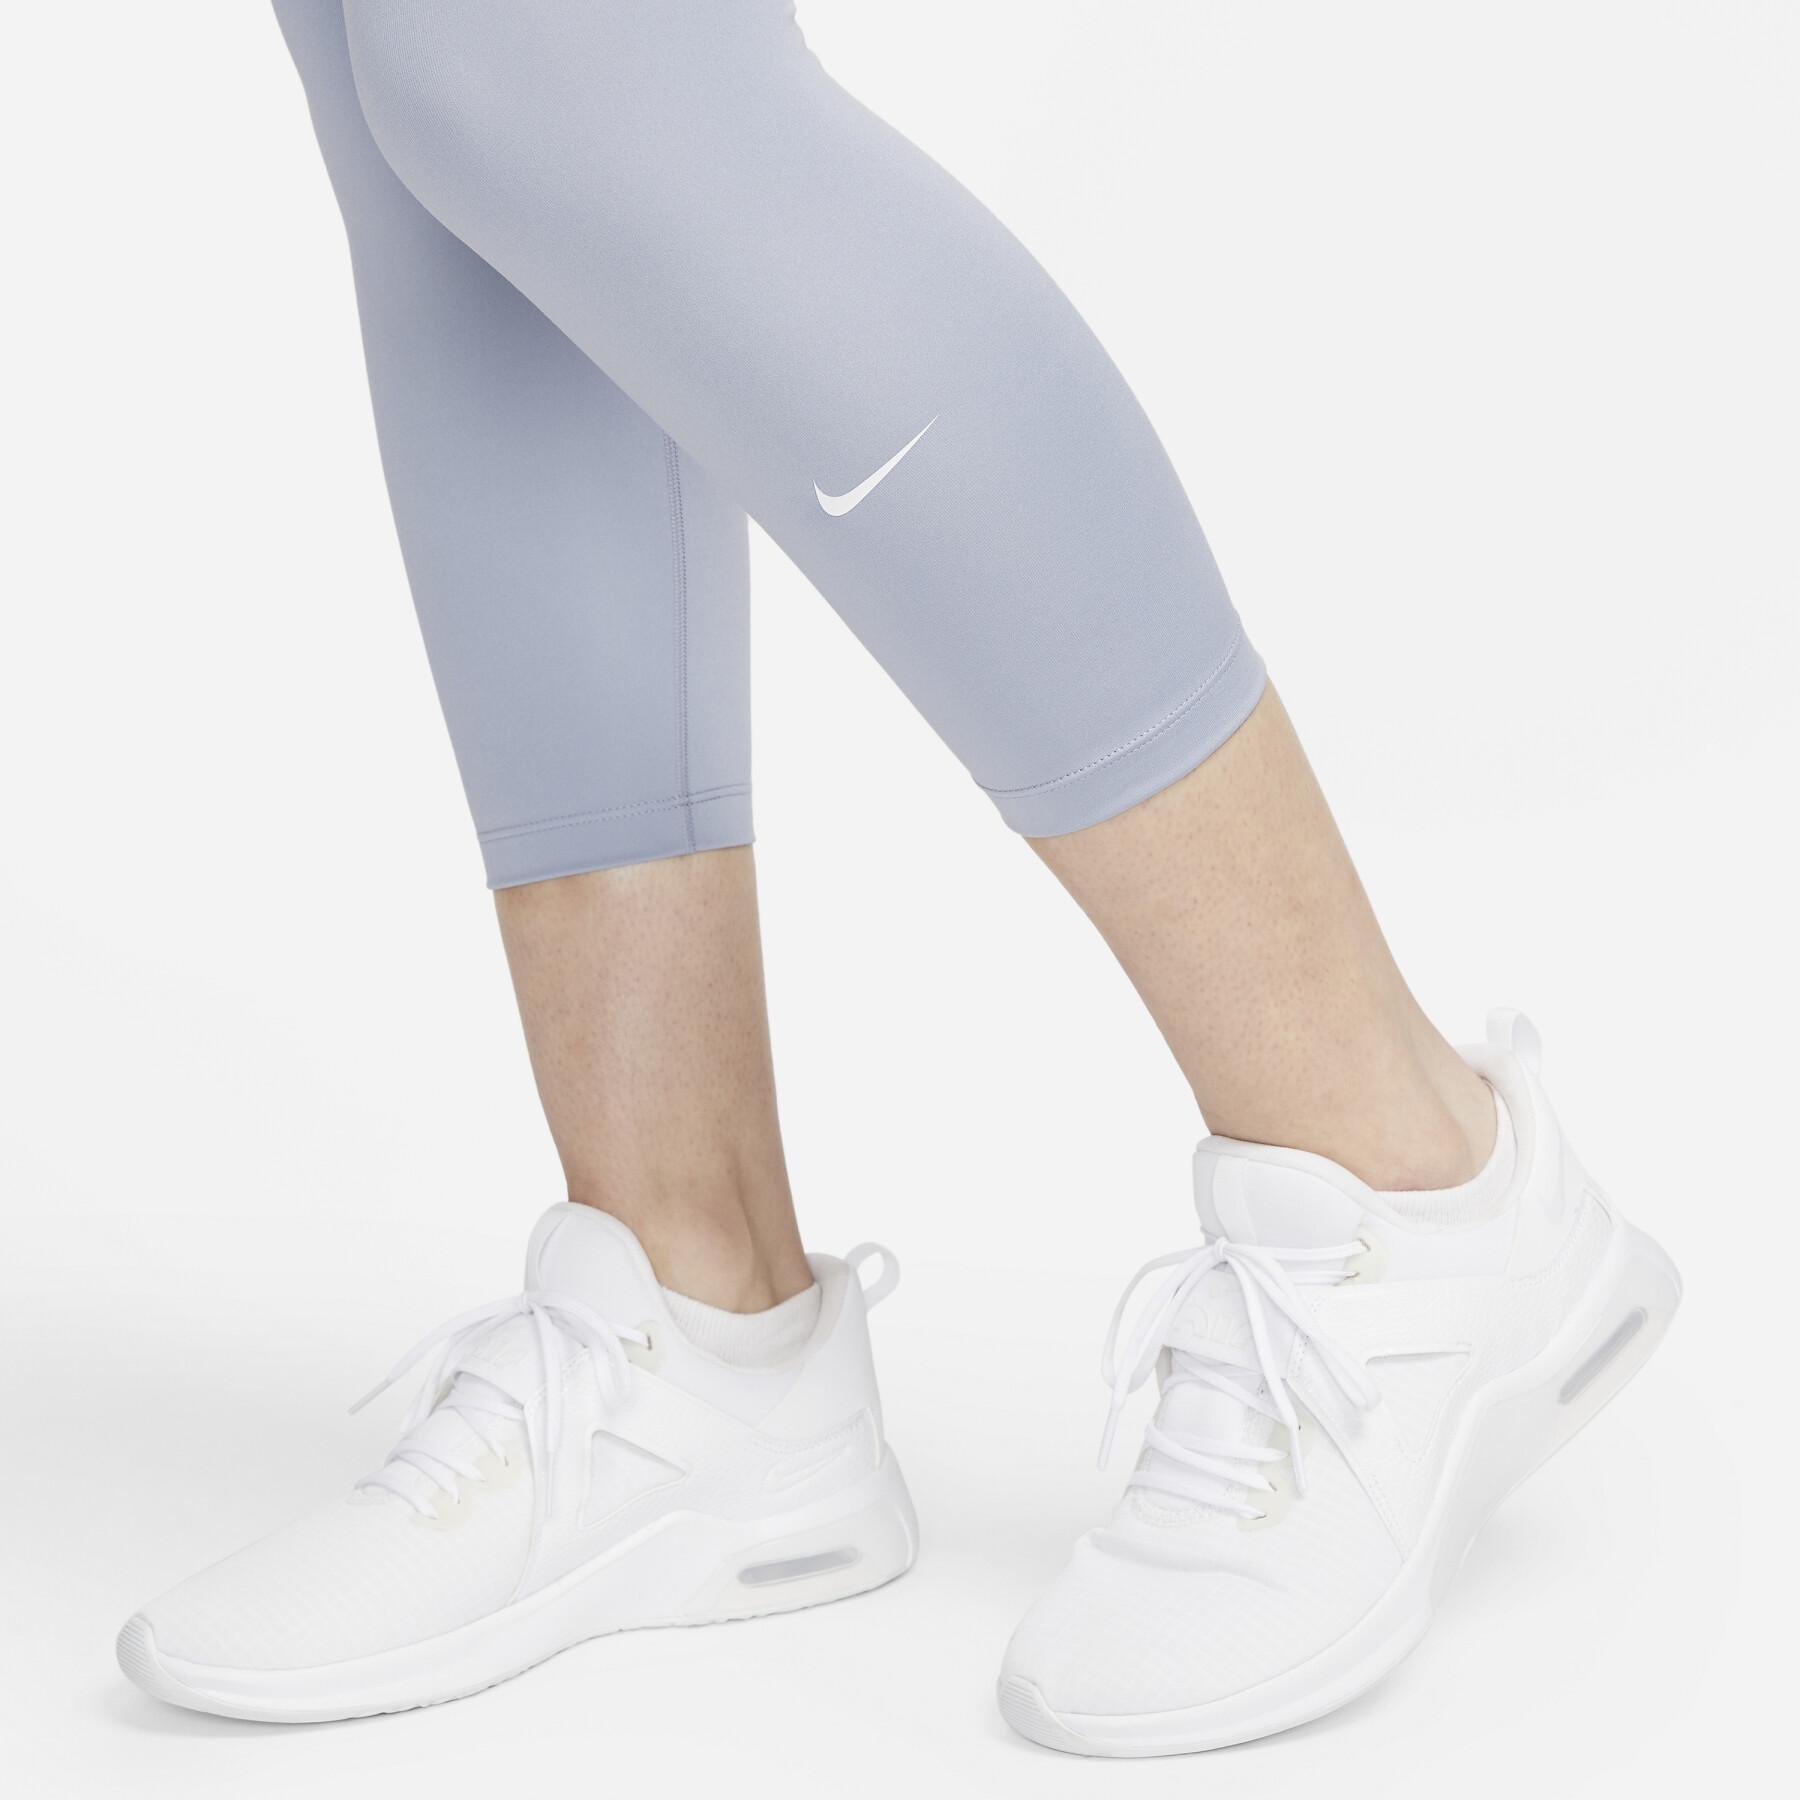 Legging court high waist woman Nike One Dri-FIT - Leggings - Women's  clothing - Fitness